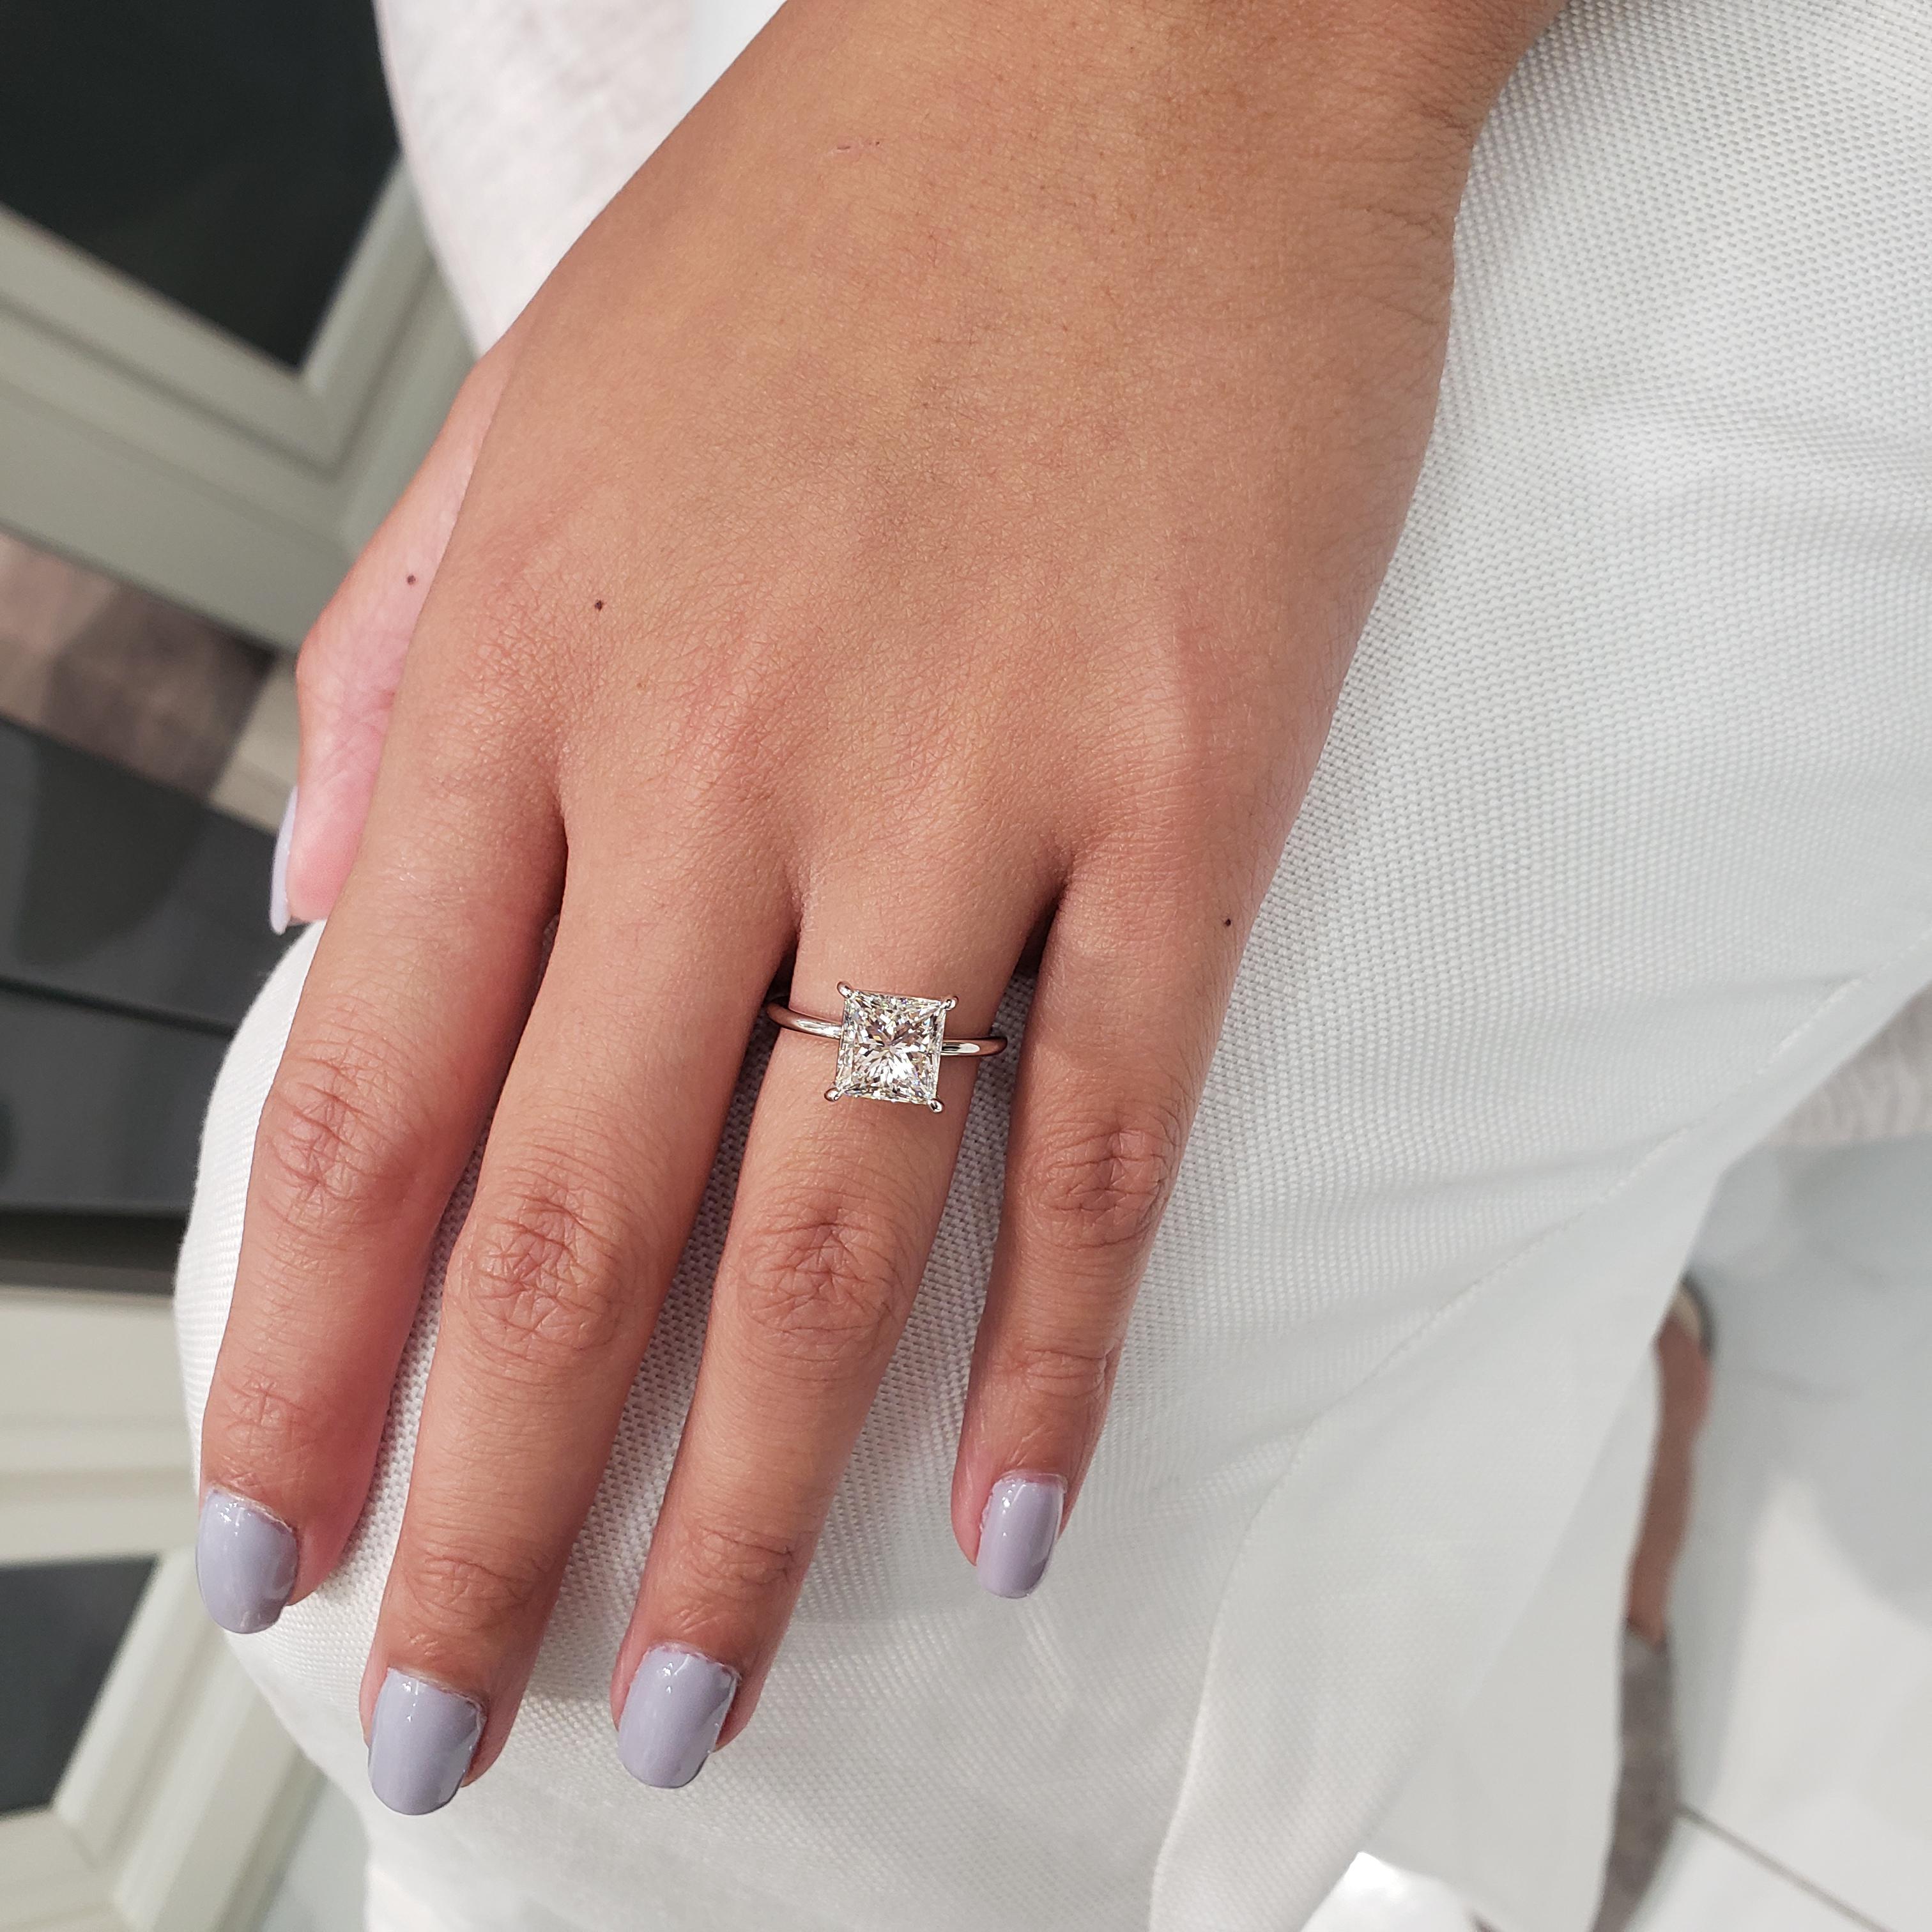 3 ct princess cut diamond solitaire engagement ring